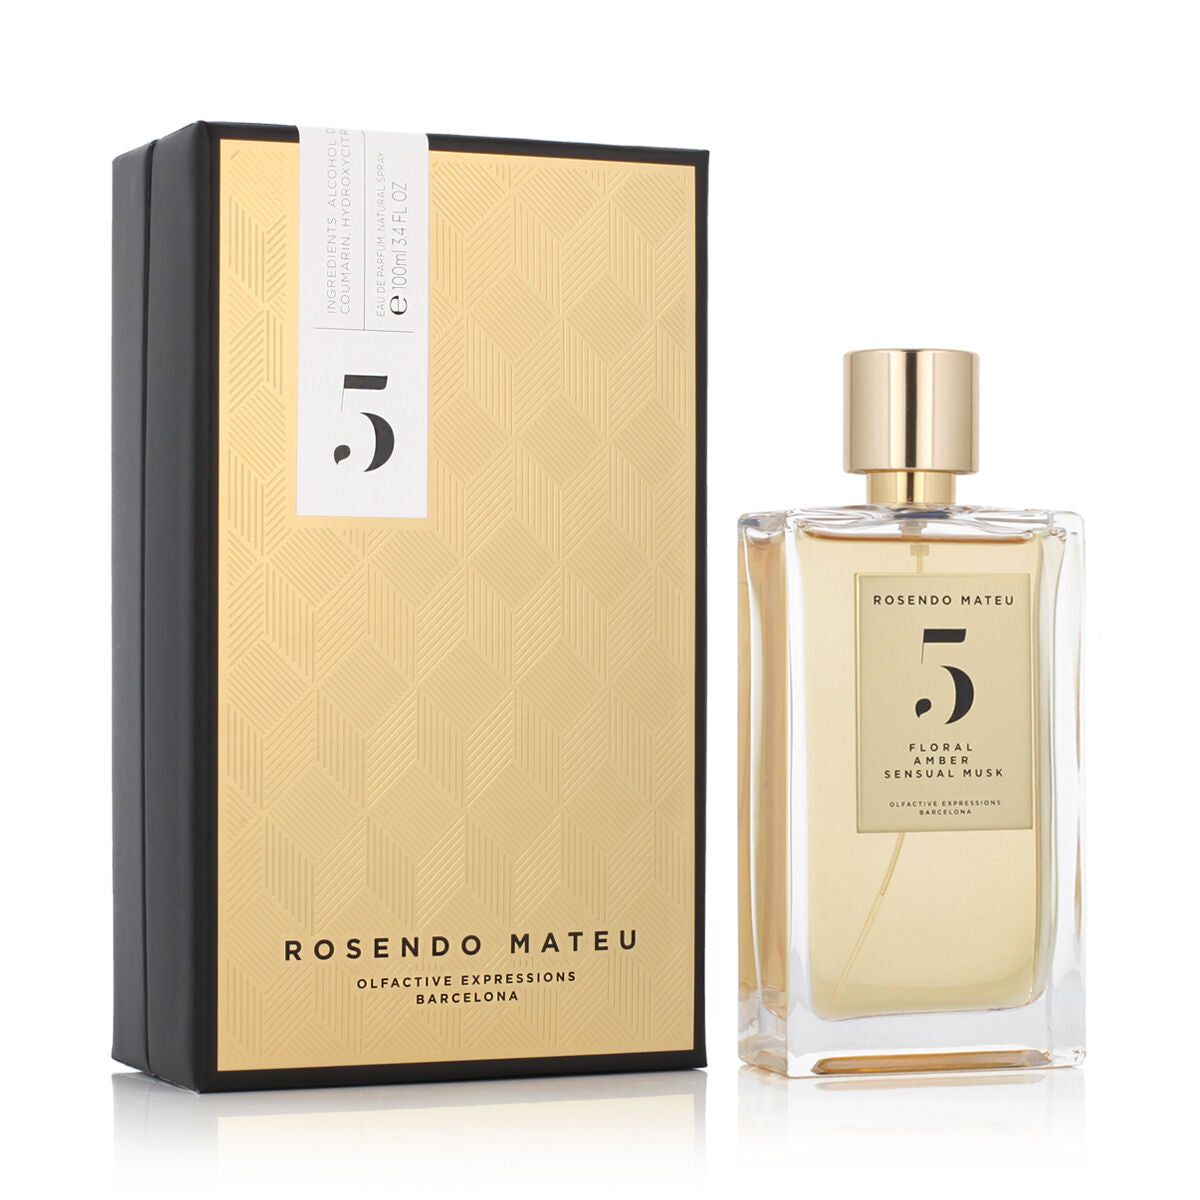 Perfume Unisex Rosendo Mateu EDP Nº 5 Floral, Amber, Sensual Musk 100 ml